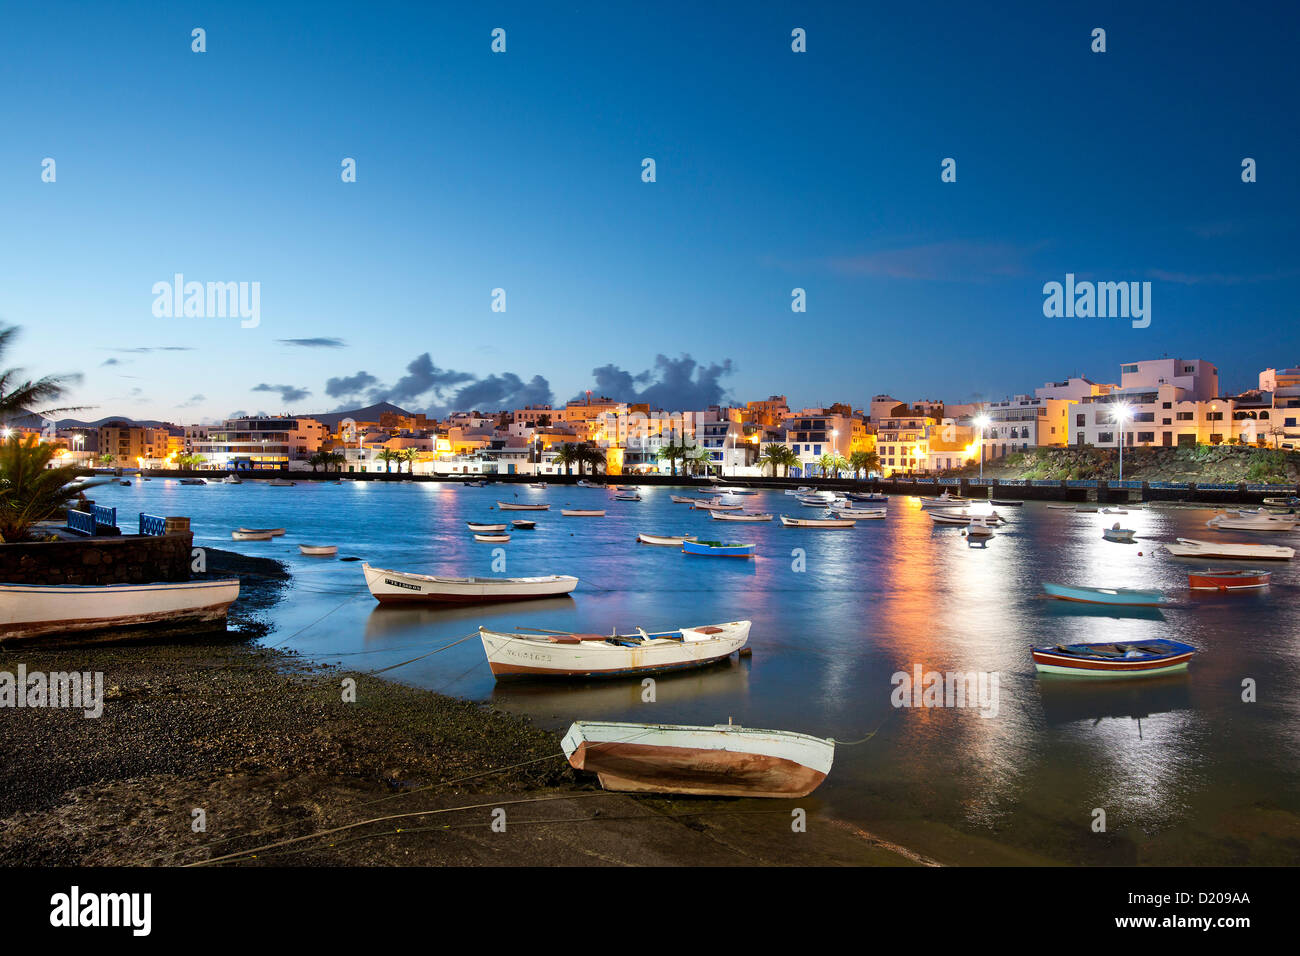 Beleuchtete Häuser am Charco de San Ginés am Abend Arrecife, Lanzarote, Kanarische Inseln, Spanien, Europa Stockfoto